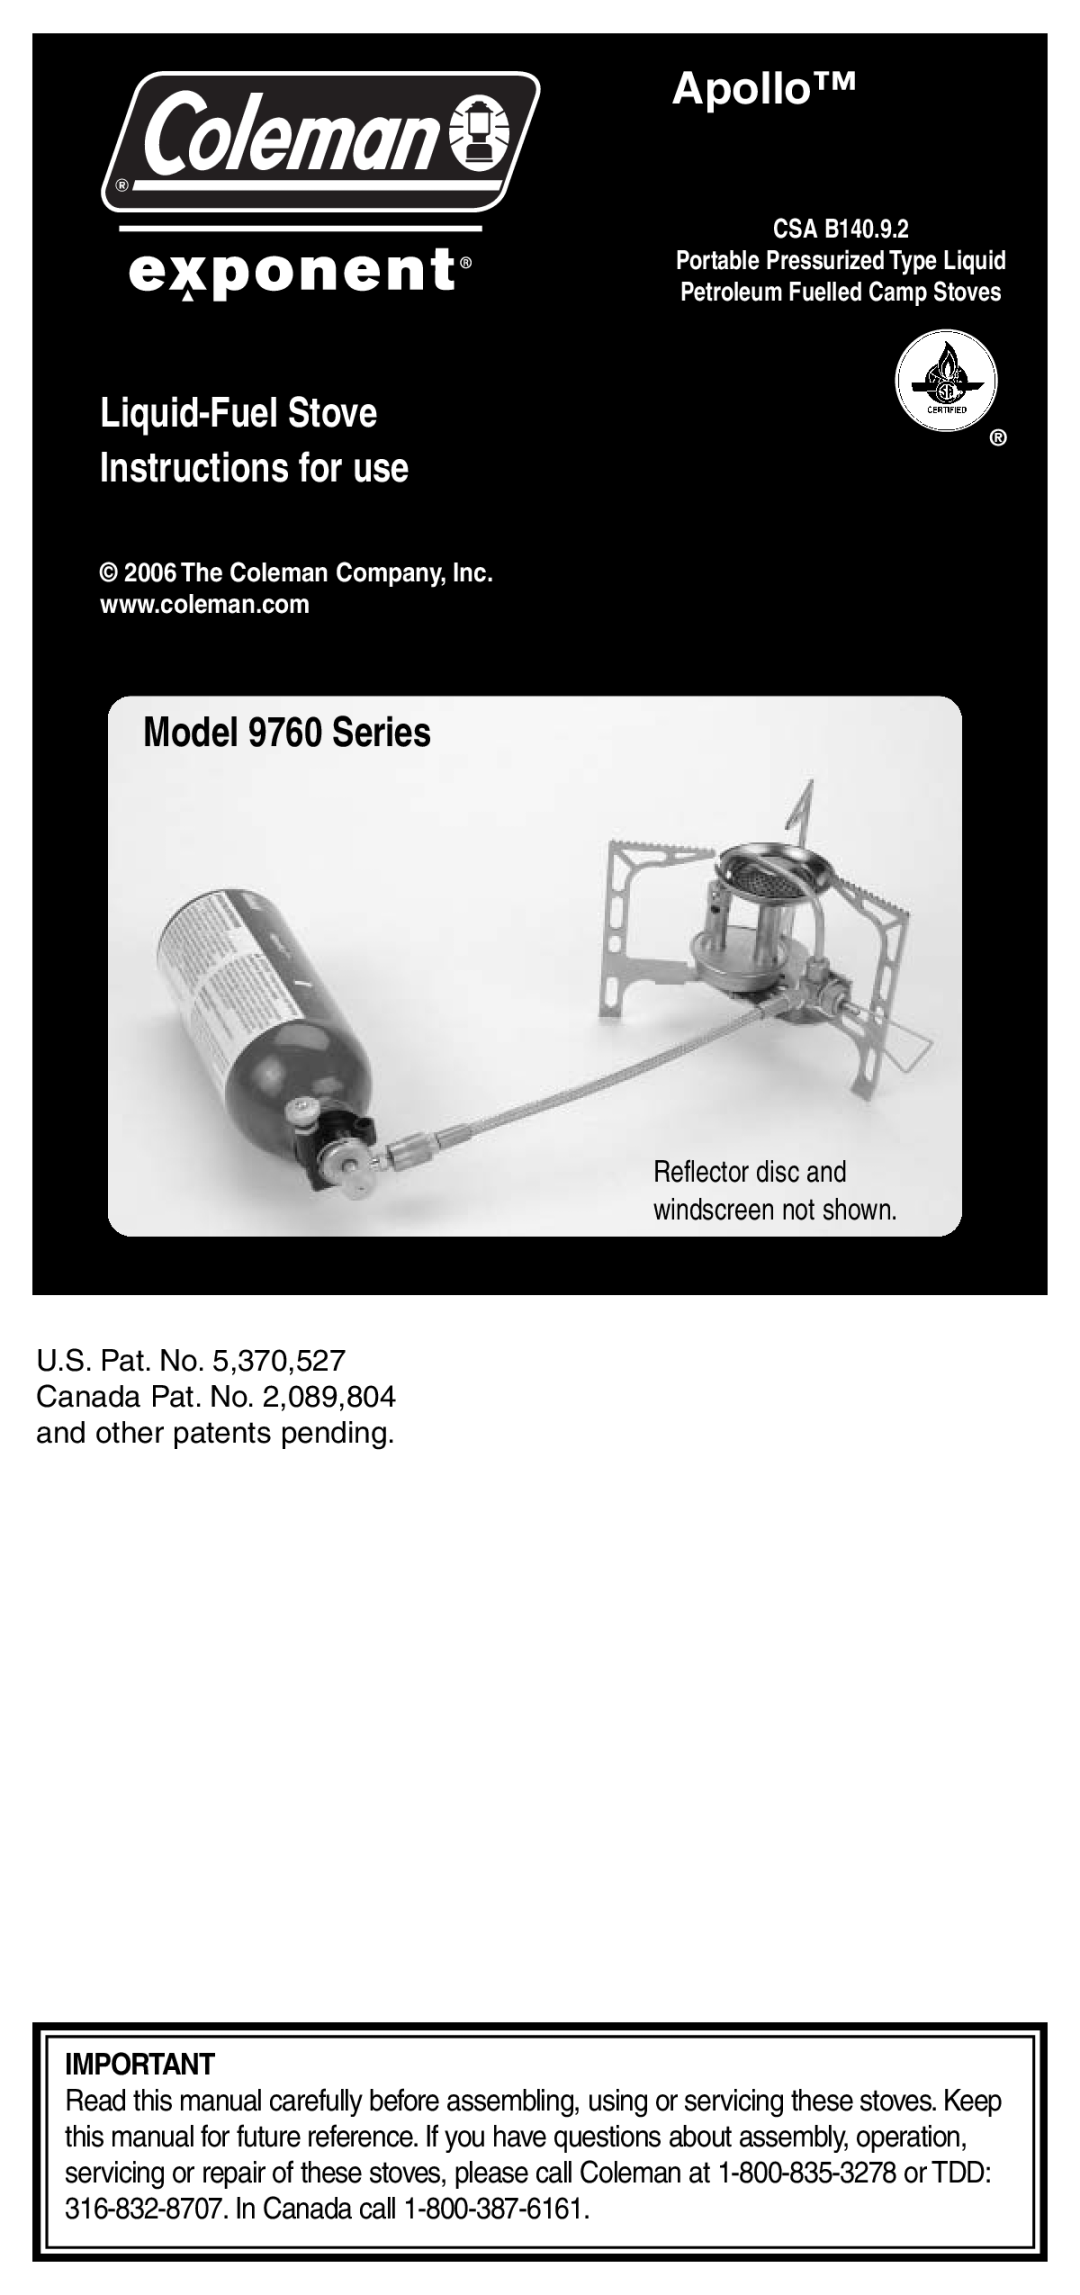 Coleman manual Apollo, Liquid-Fuel Stove, Instructions for use, Model 9760 Series 